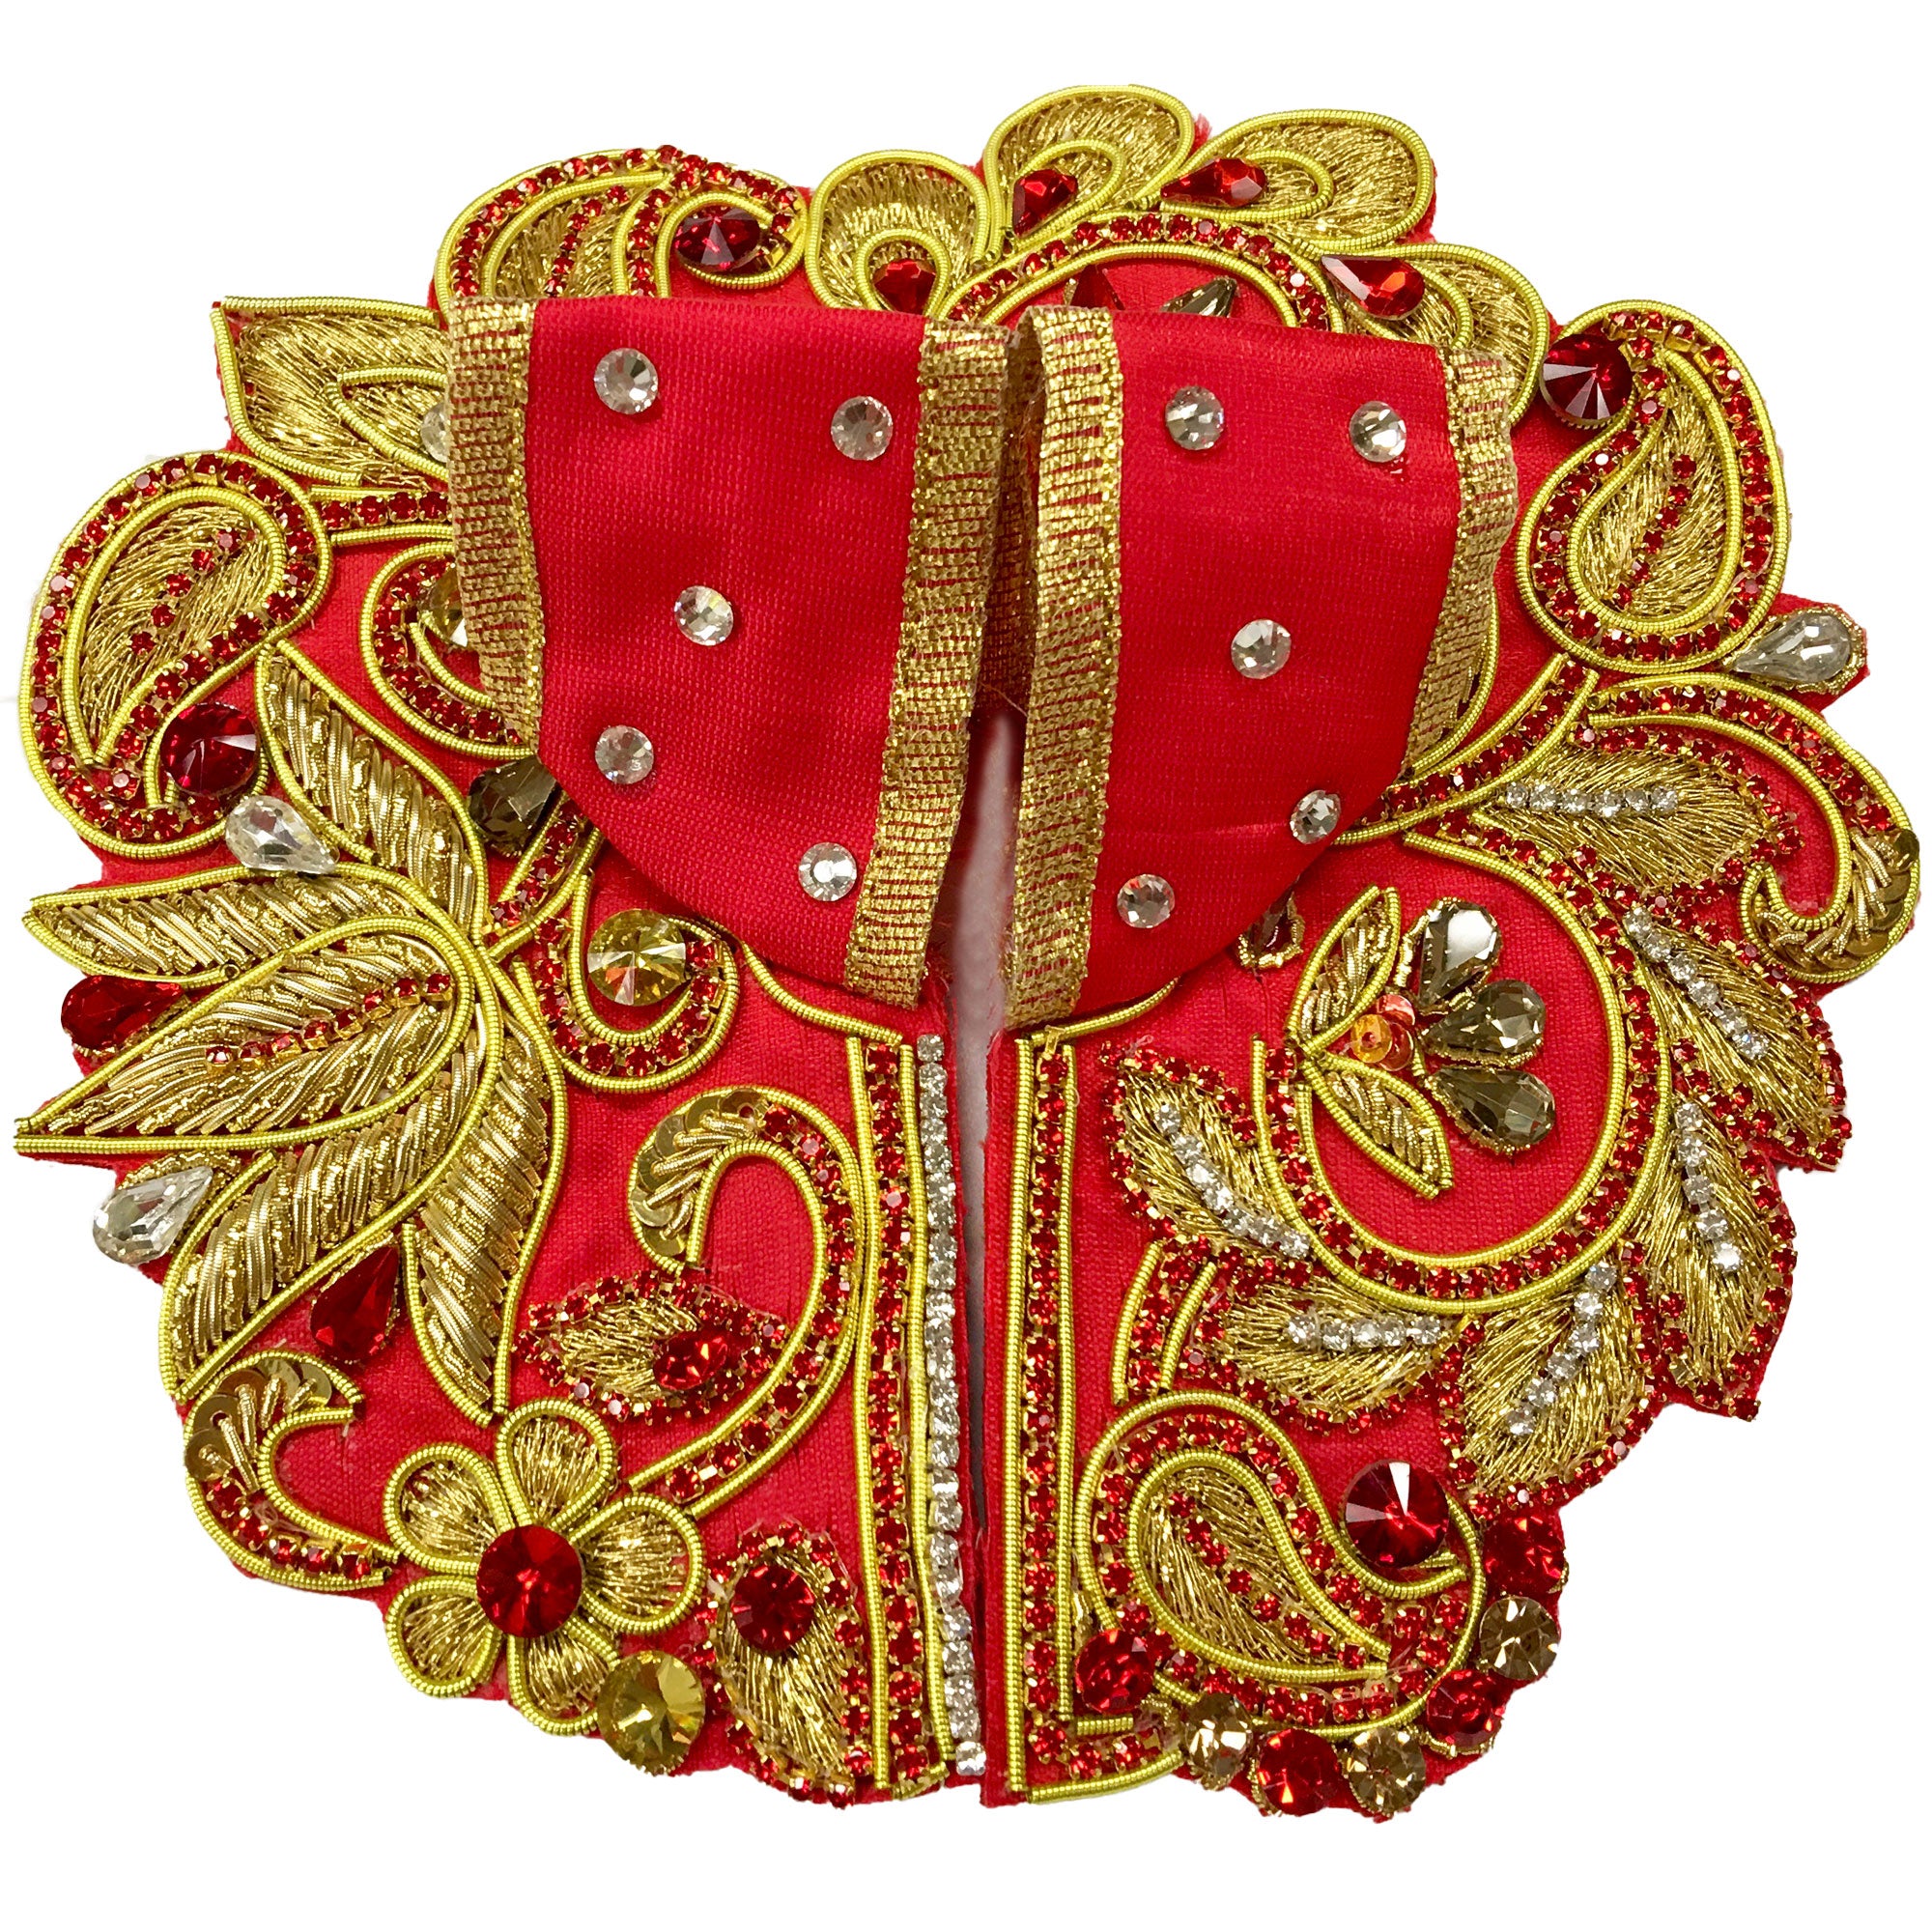 Radha Kund Golden Lotus - On Red Satin - Laddu Gopal Outfit